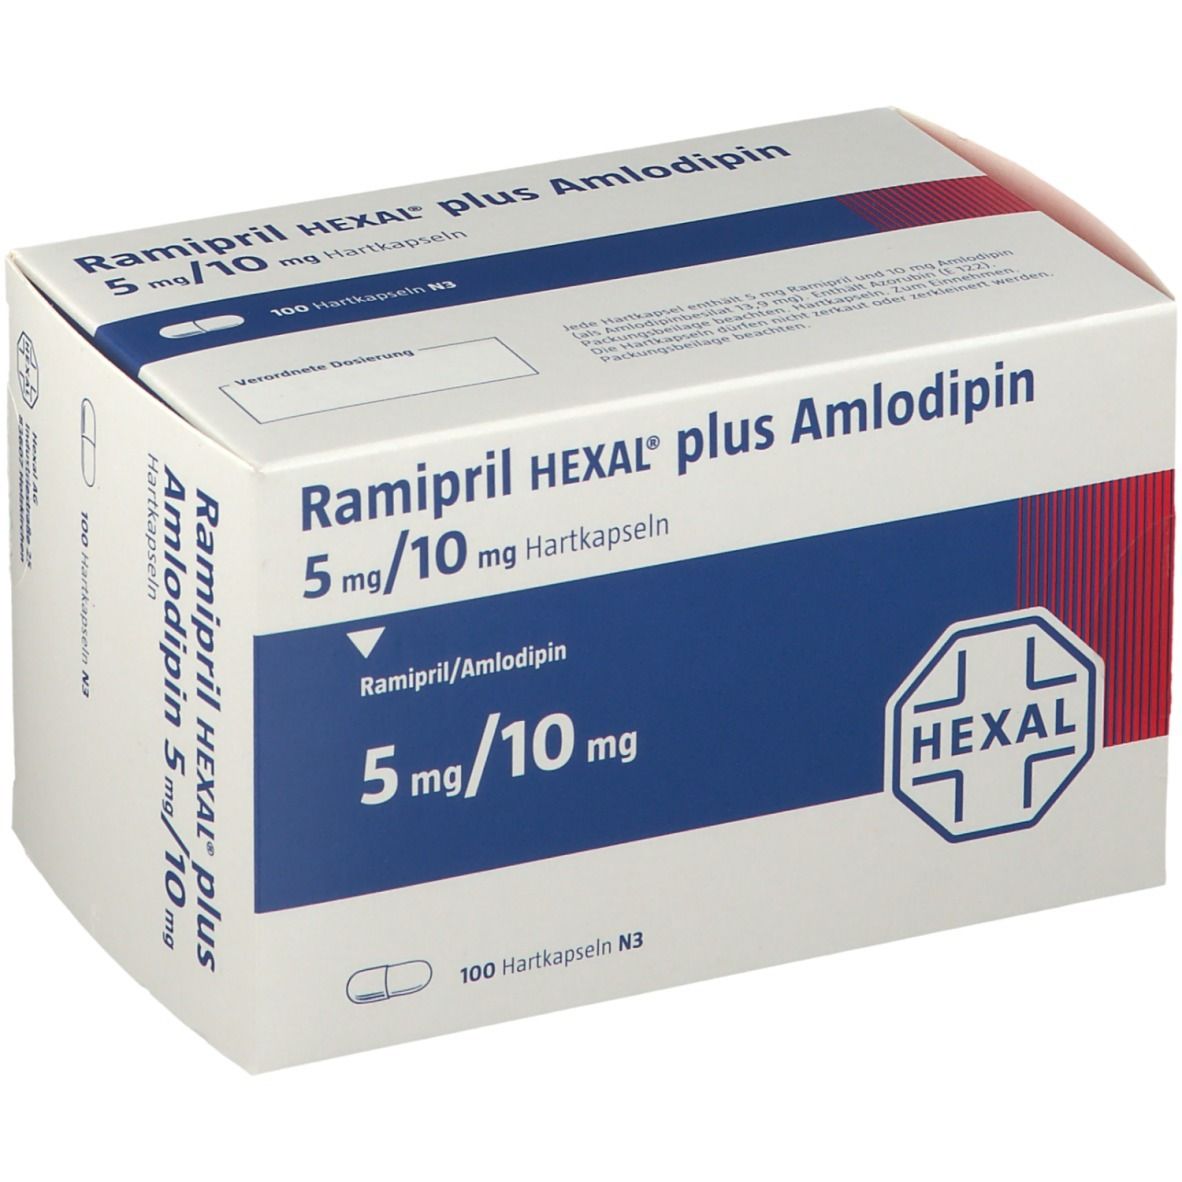 Ramipril HEXAL® plus Amlodipin 5 mg/10 mg